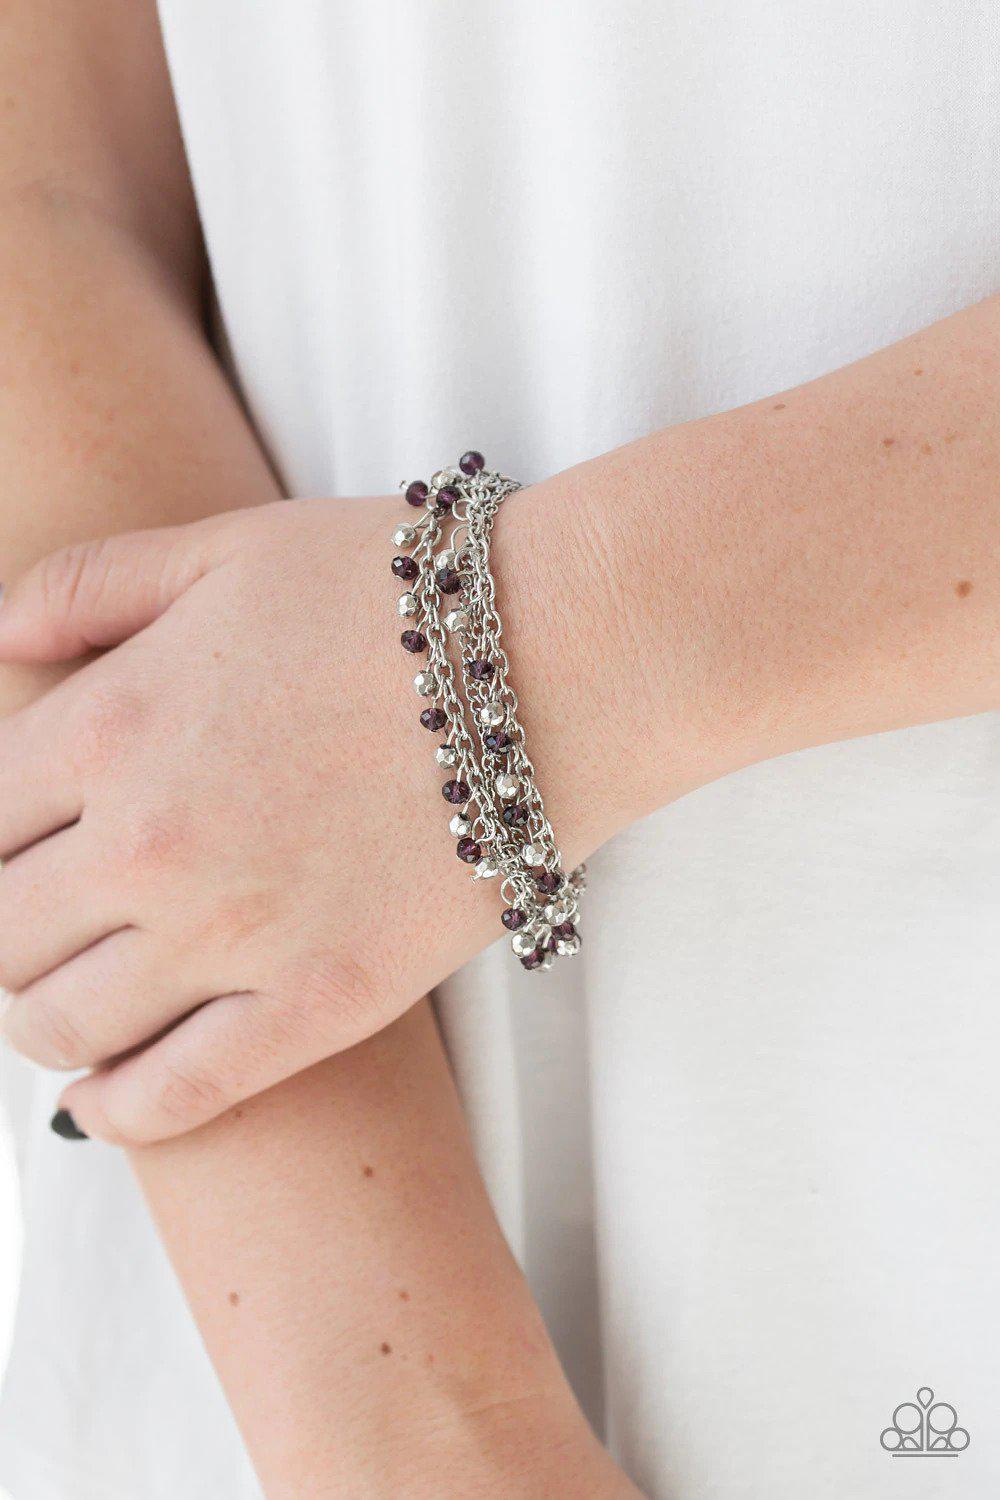 Cash Confidence Purple Bracelet - Paparazzi Accessories- lightbox - CarasShop.com - $5 Jewelry by Cara Jewels